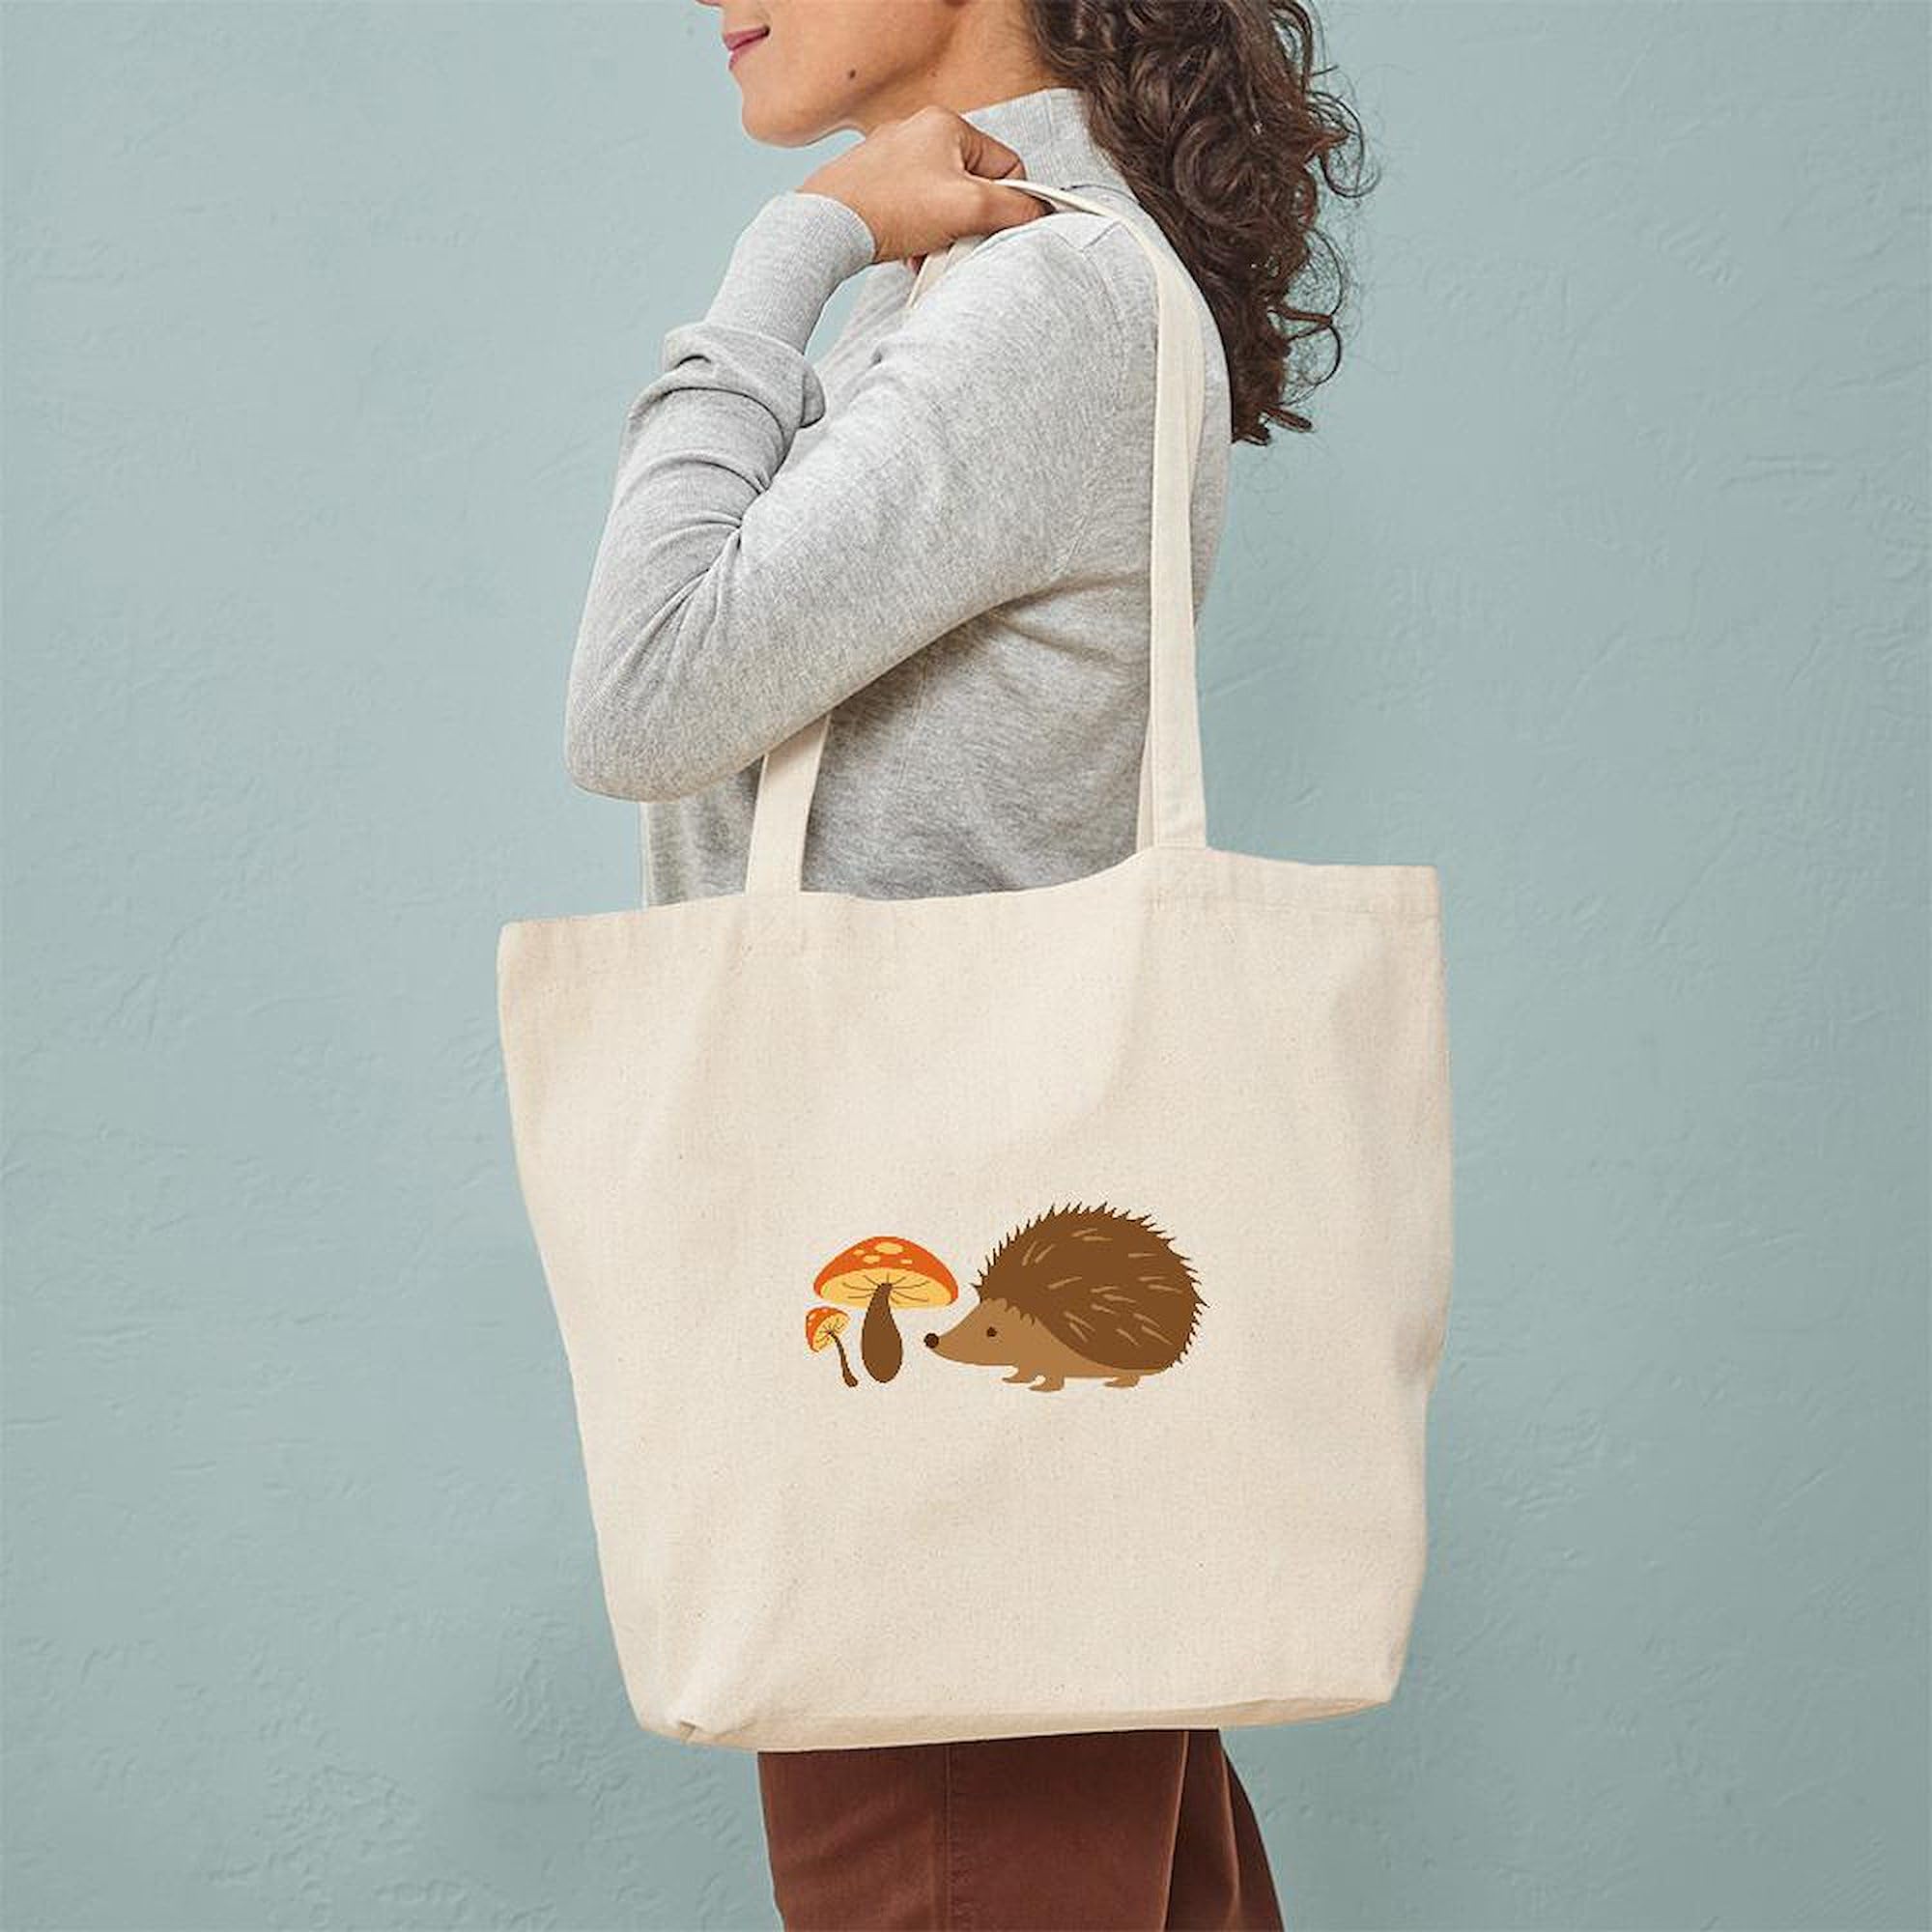 CafePress Hedgehog With Mushrooms Tote Bag Canvas Tote Shopping Bag